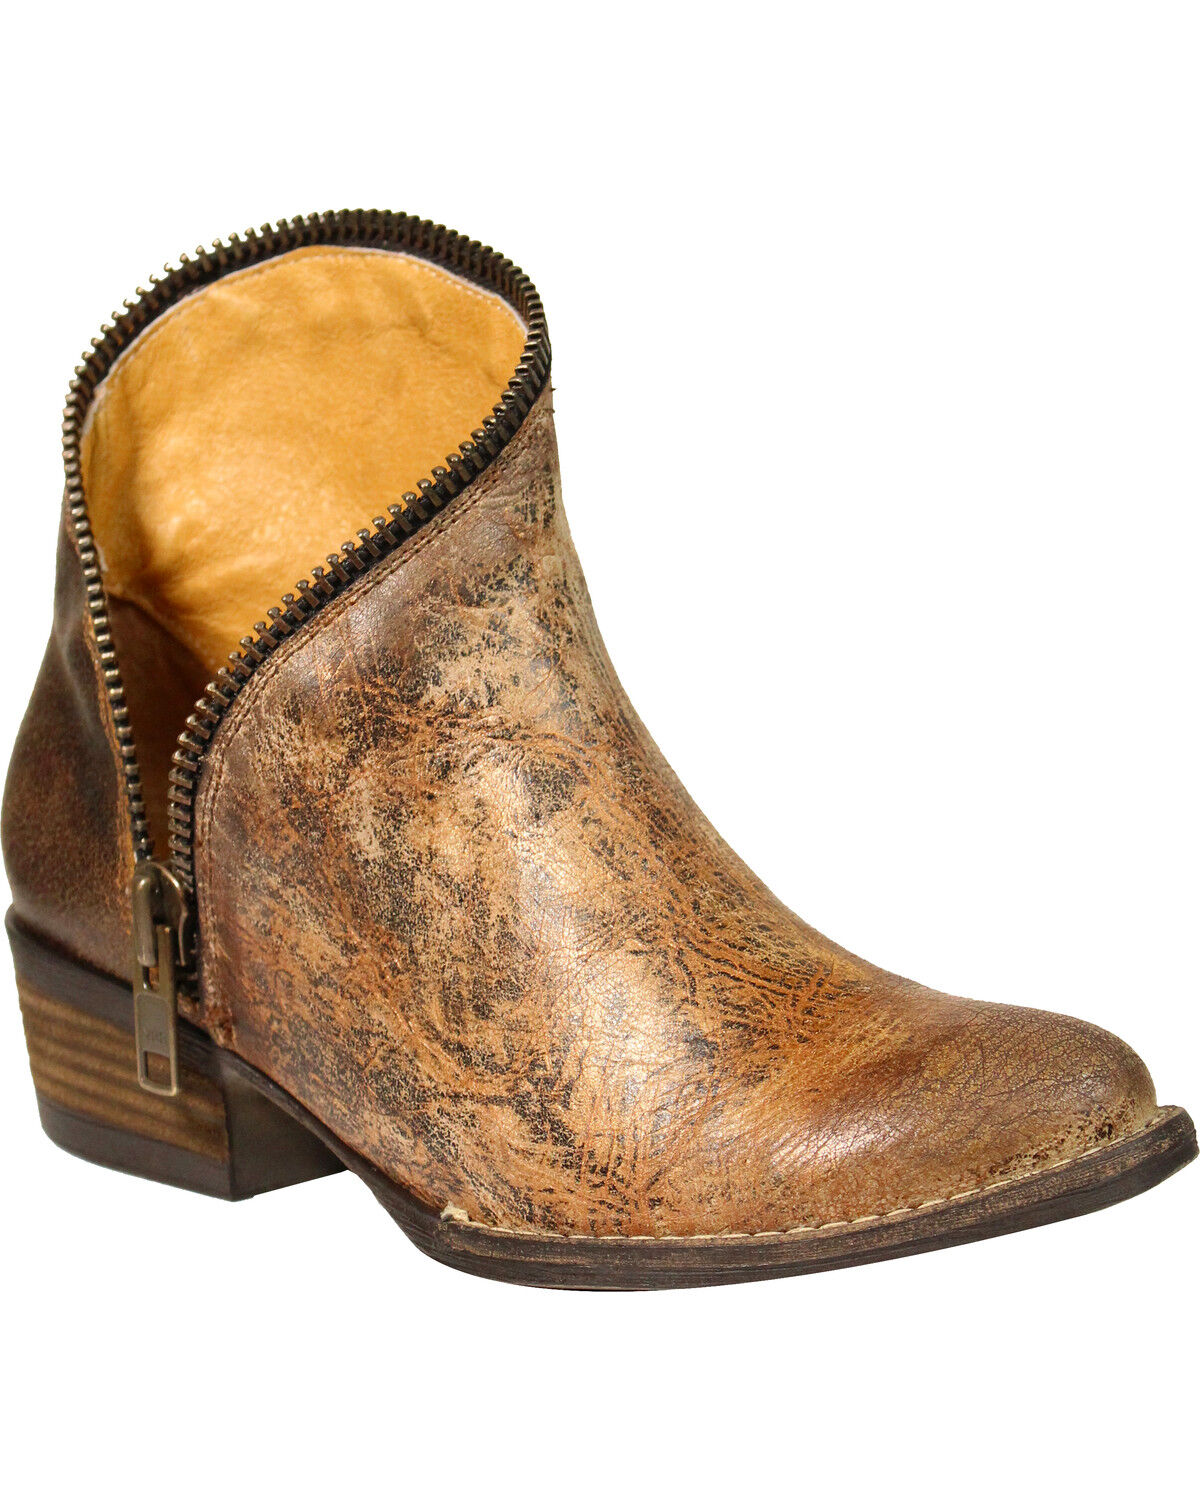 Corral Women's  Zipper J Toe Leather Western Ankle Boots Golden E1217 